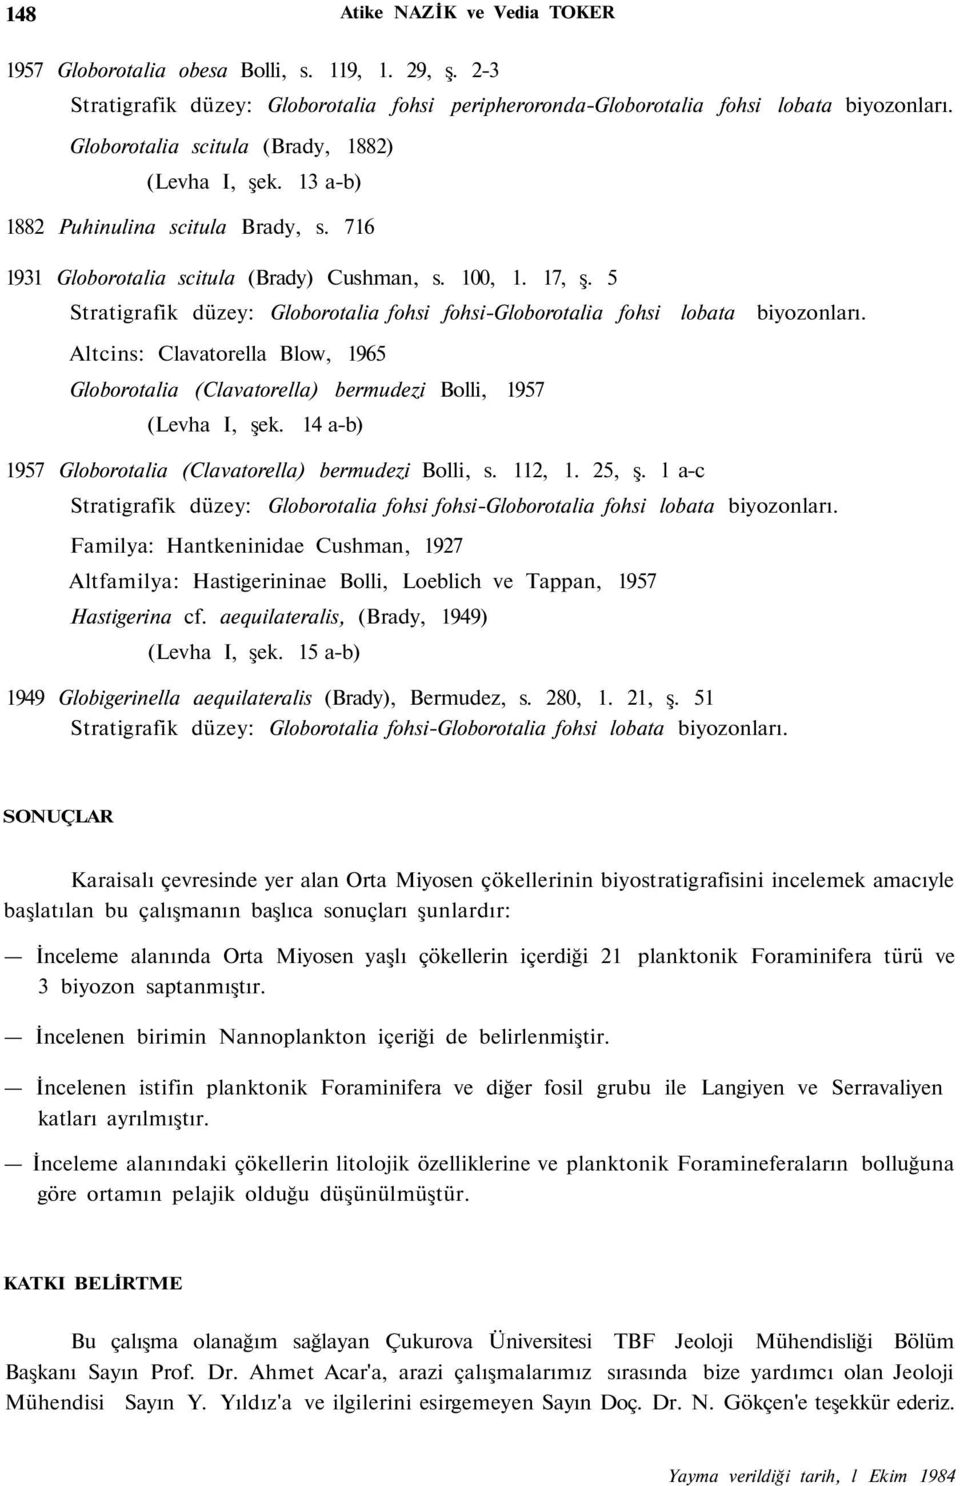 5 Stratigrafik düzey: Globorotalia fohsi fohsi-globorotalia fohsi lobata Altcins: Clavatorella Blow, 1965 Globorotalia (Clavatorella) bermudezi Bolli, 1957 (Levha I, şek. 14 a-b) biyozonları.